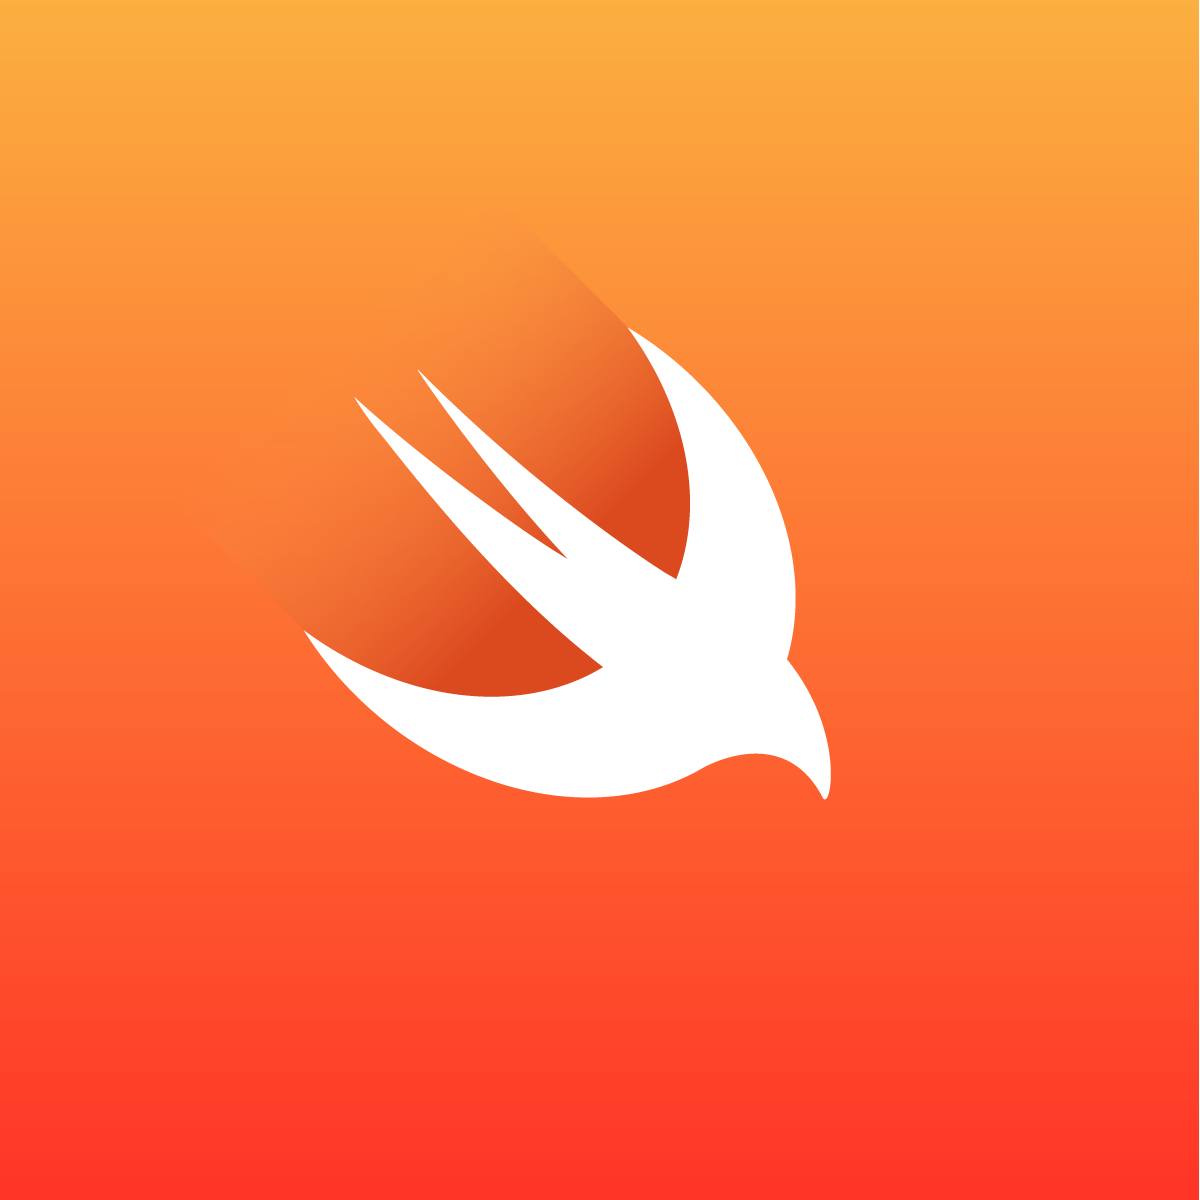 Let's Learn about 'Swift' with iLearn for Free!!! Enroll Now: j.mp/3icArtd #Swift #Programming #OpenSource #iLearn #WhereLearningisFree